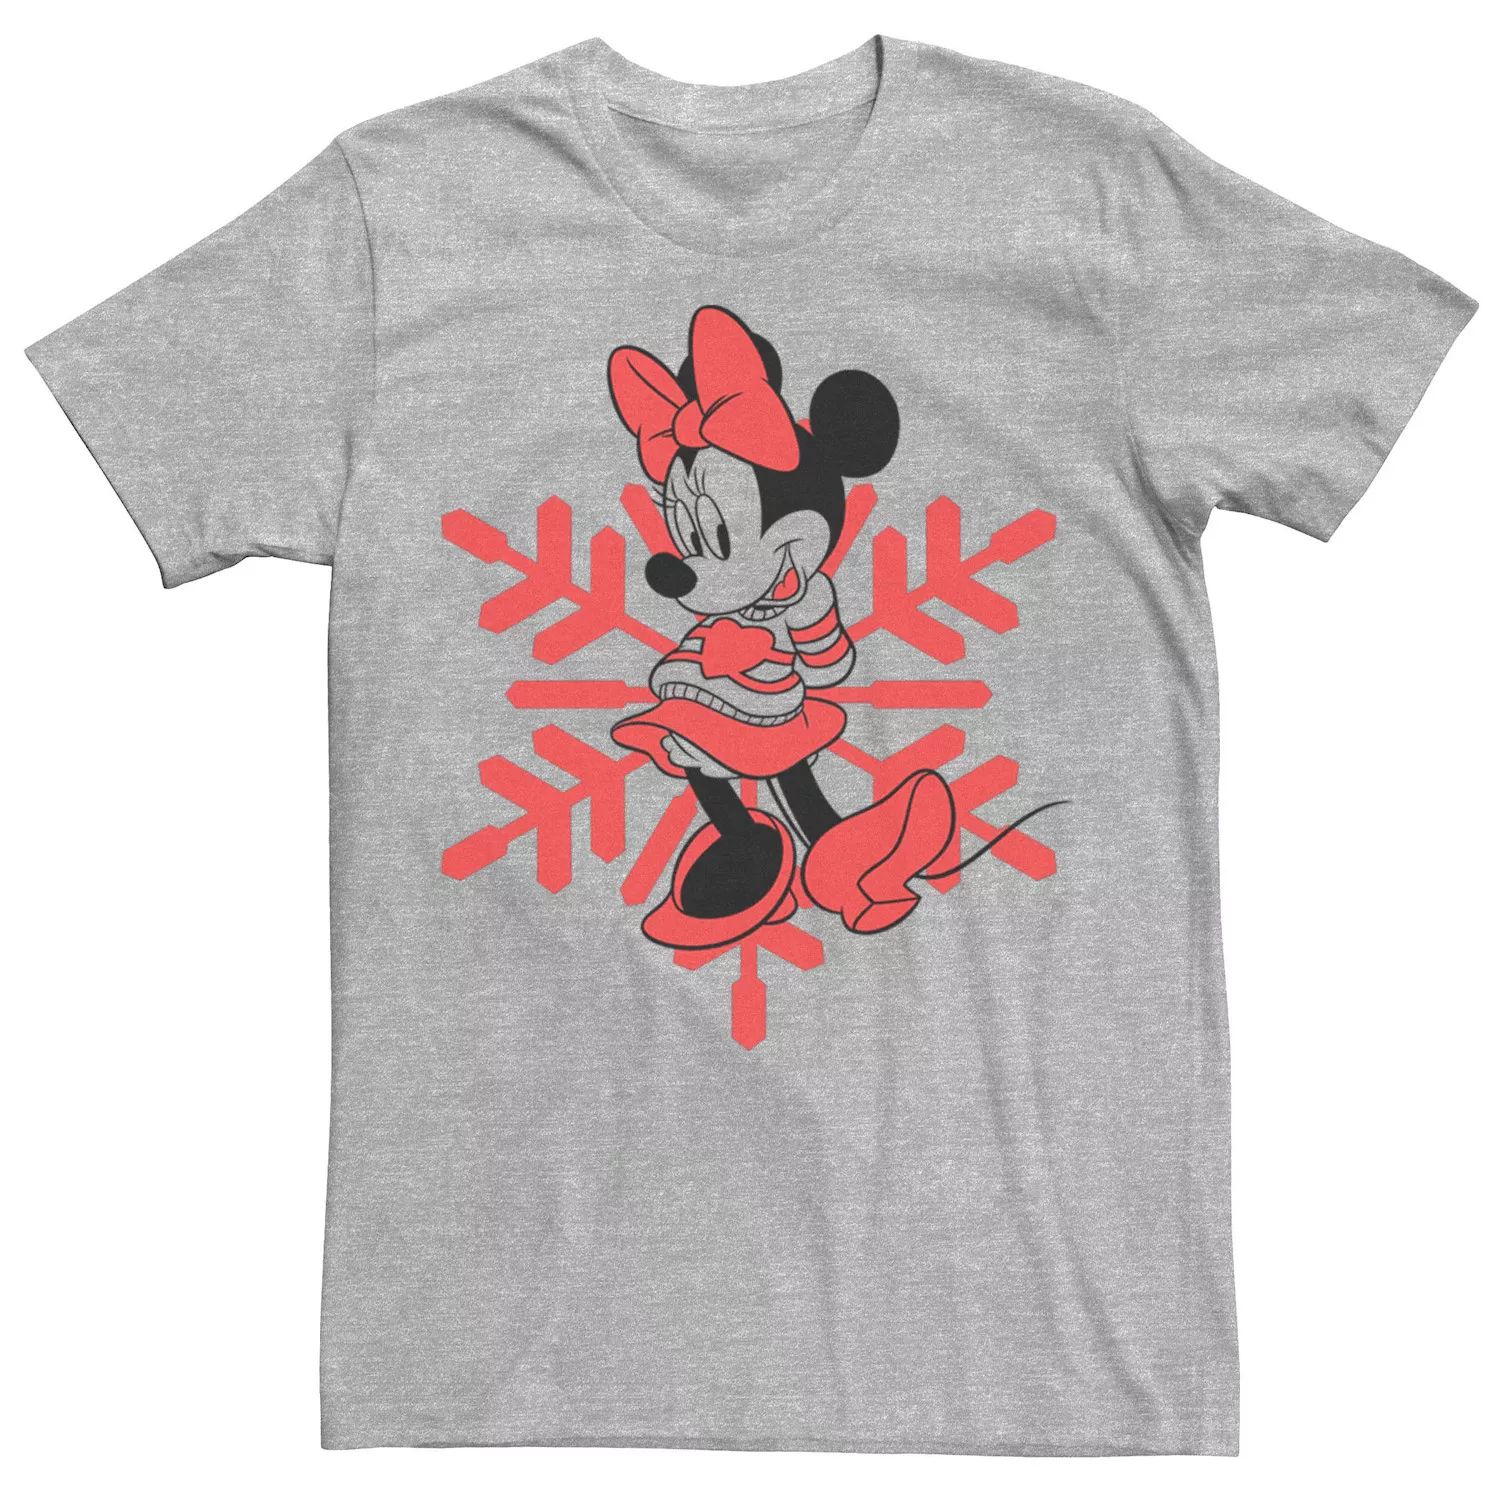 Мужская футболка с рождественским контуром Disney Minnie Mouse Licensed Character